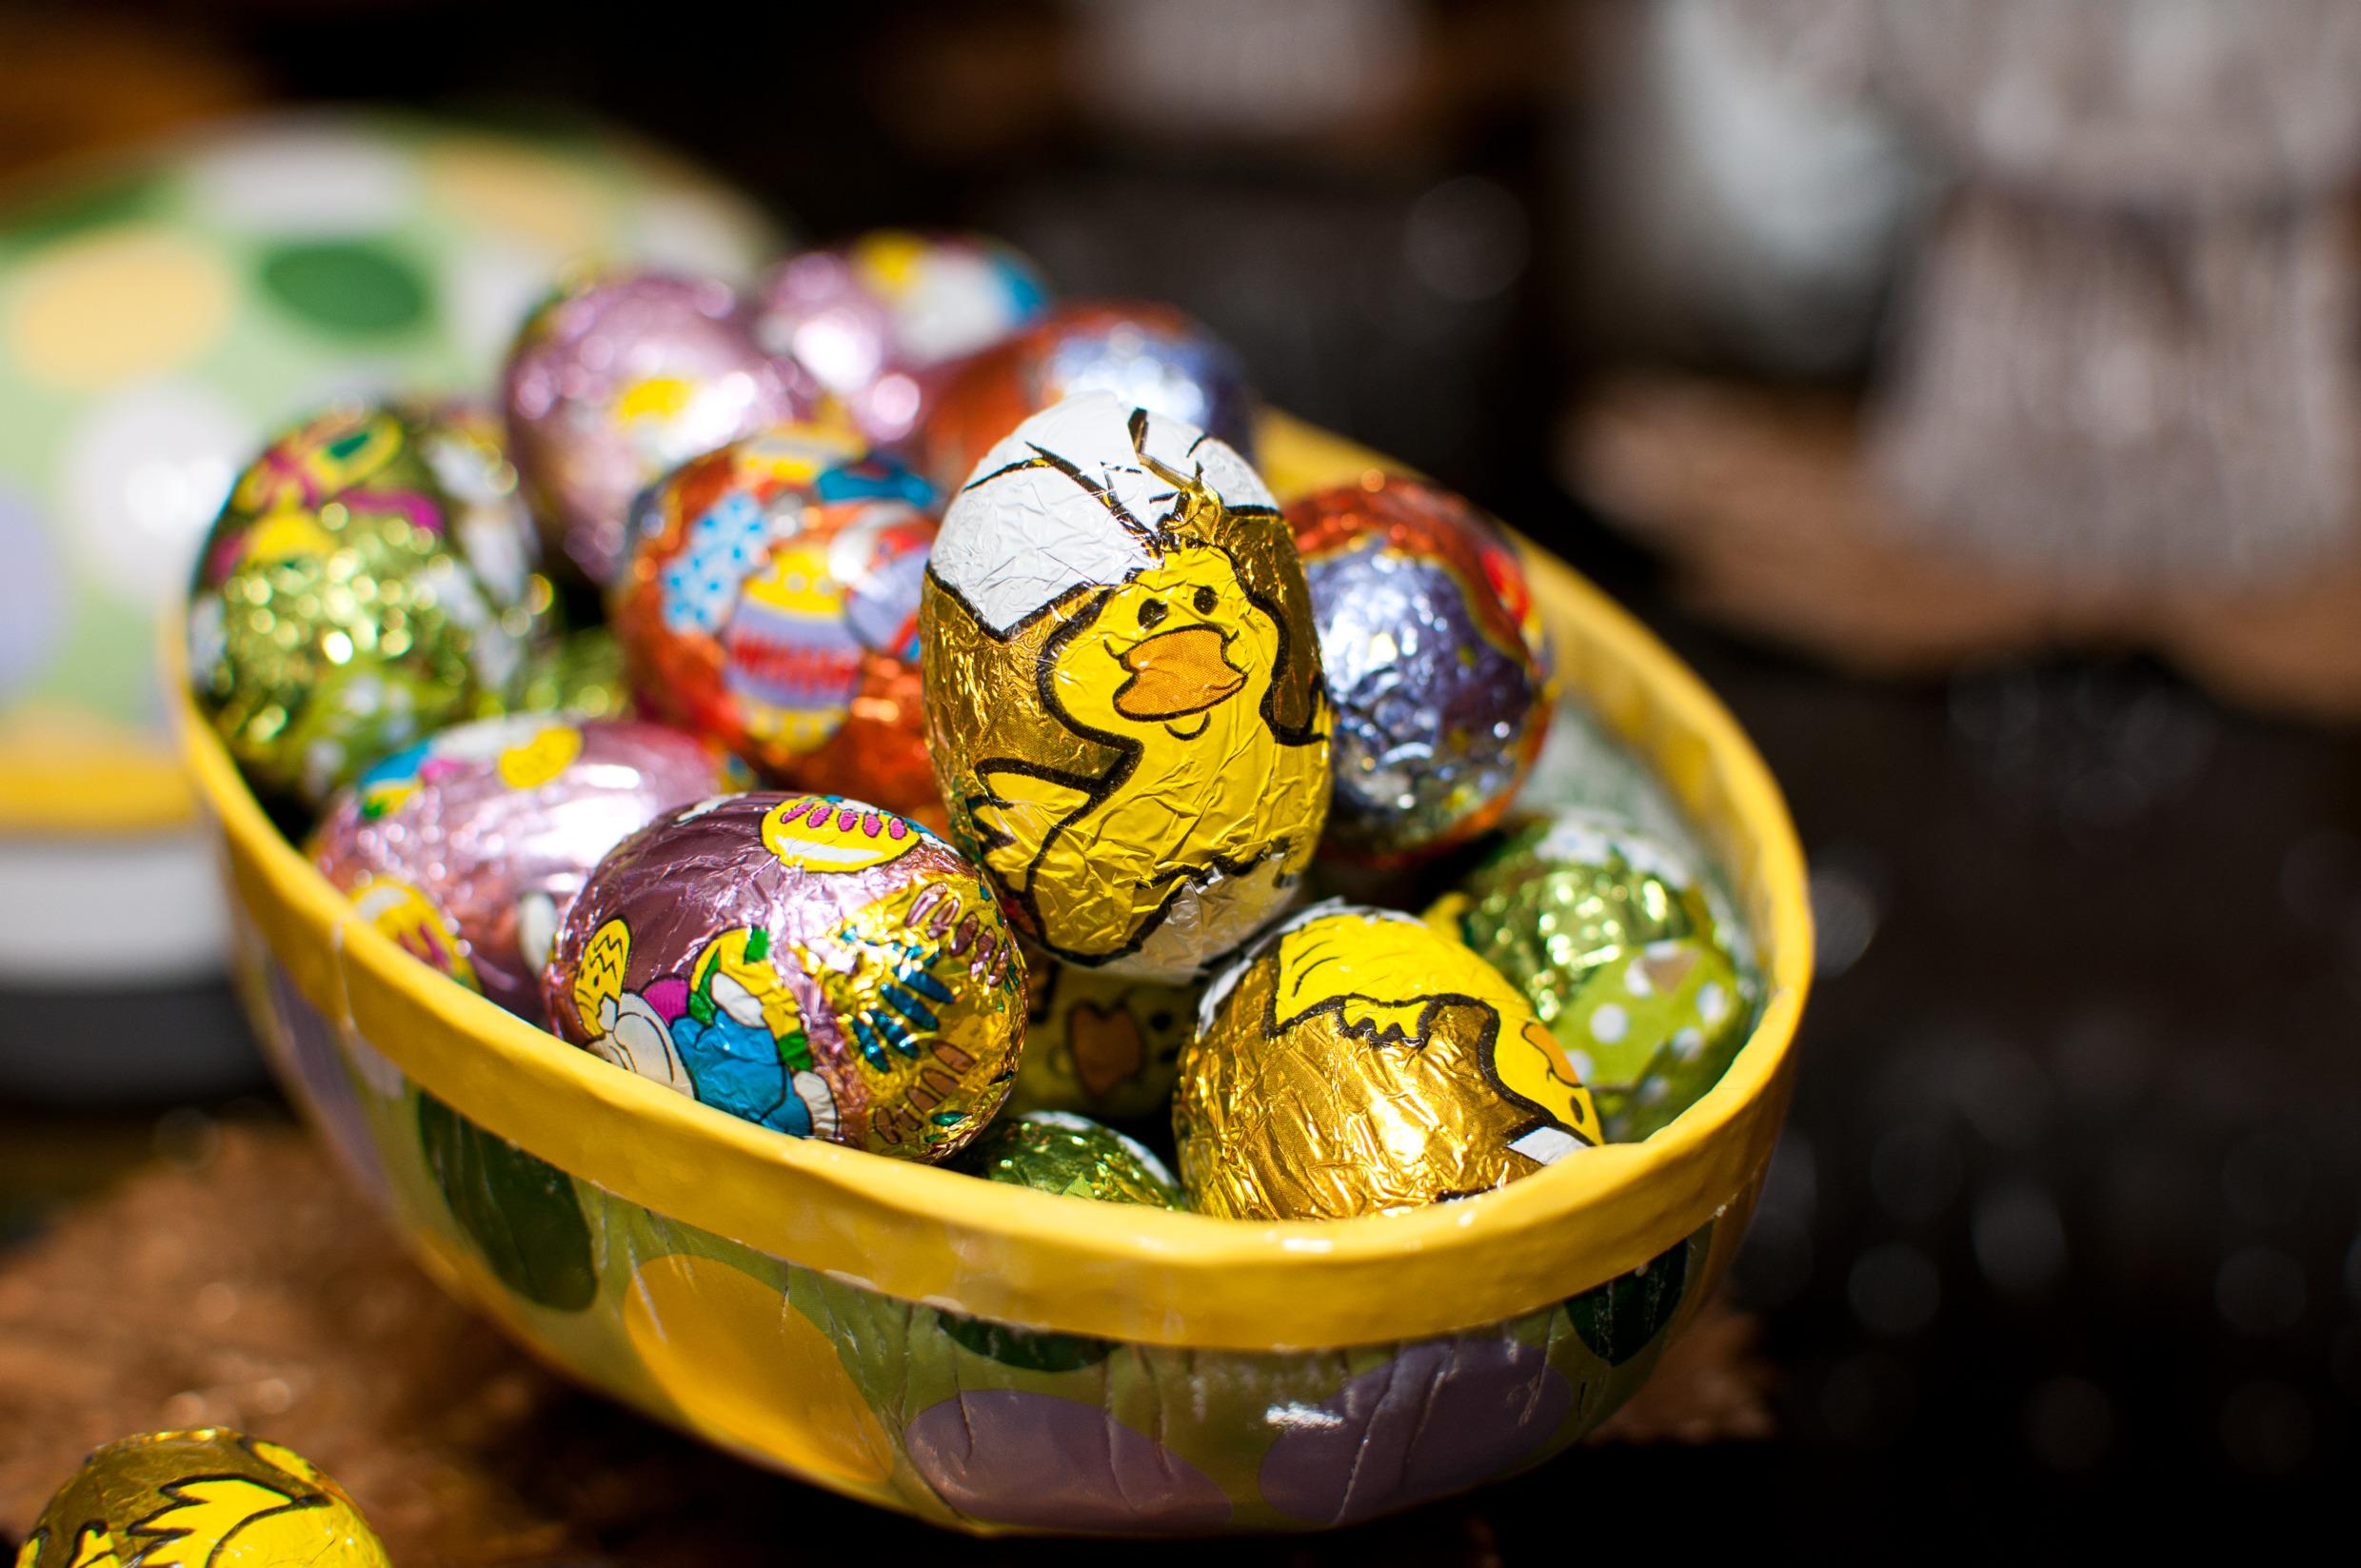 Chocolate eggs wraped in colourful foil, lying in a big cardboard egg.